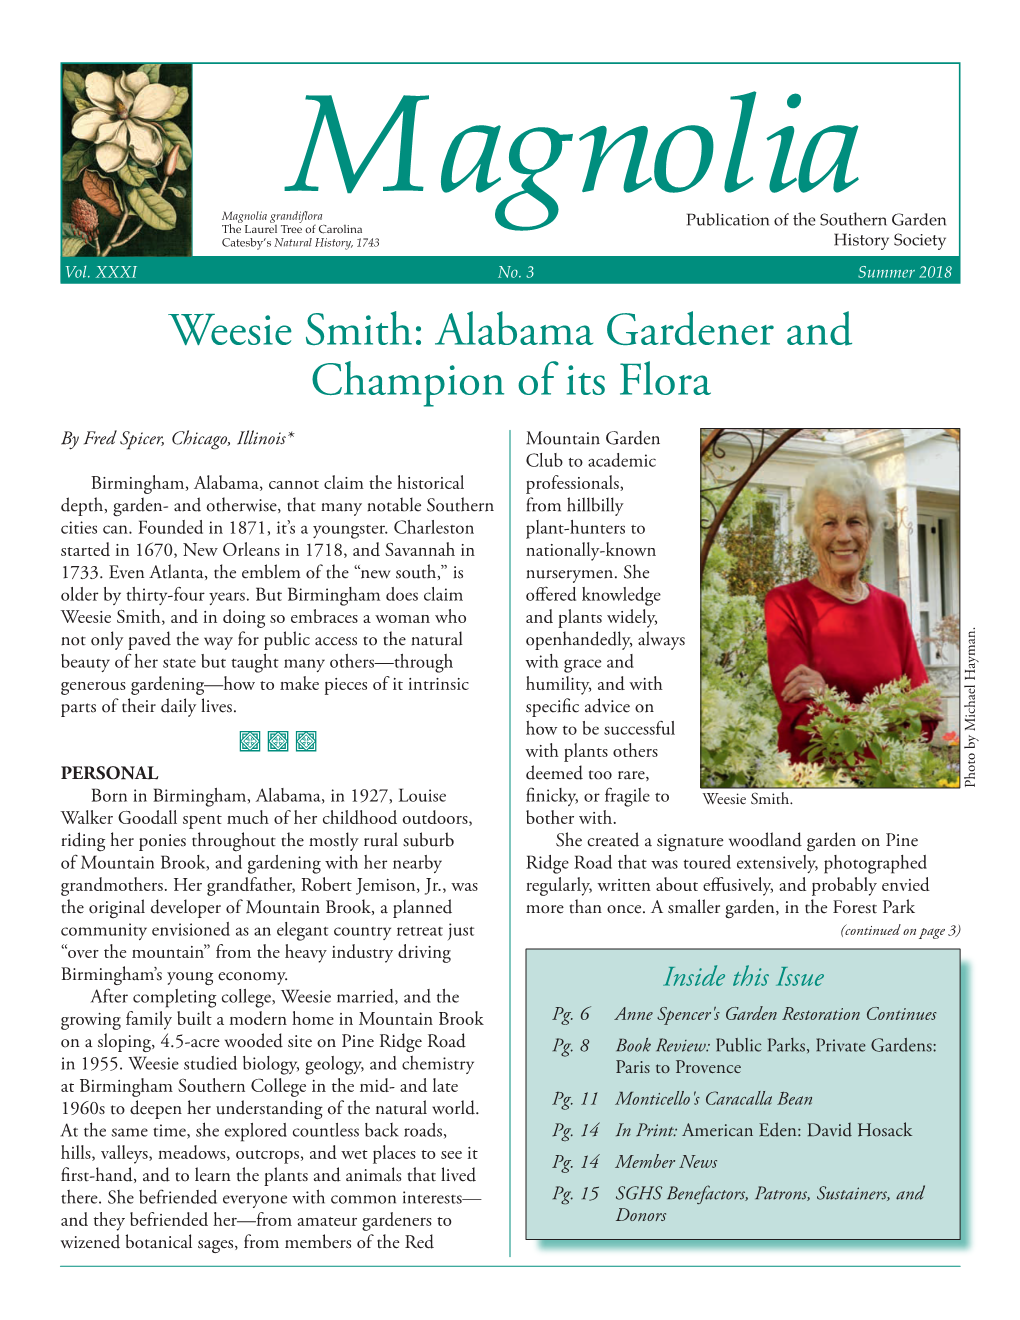 Weesie Smith: Alabama Gardener and Champion of Its Flora